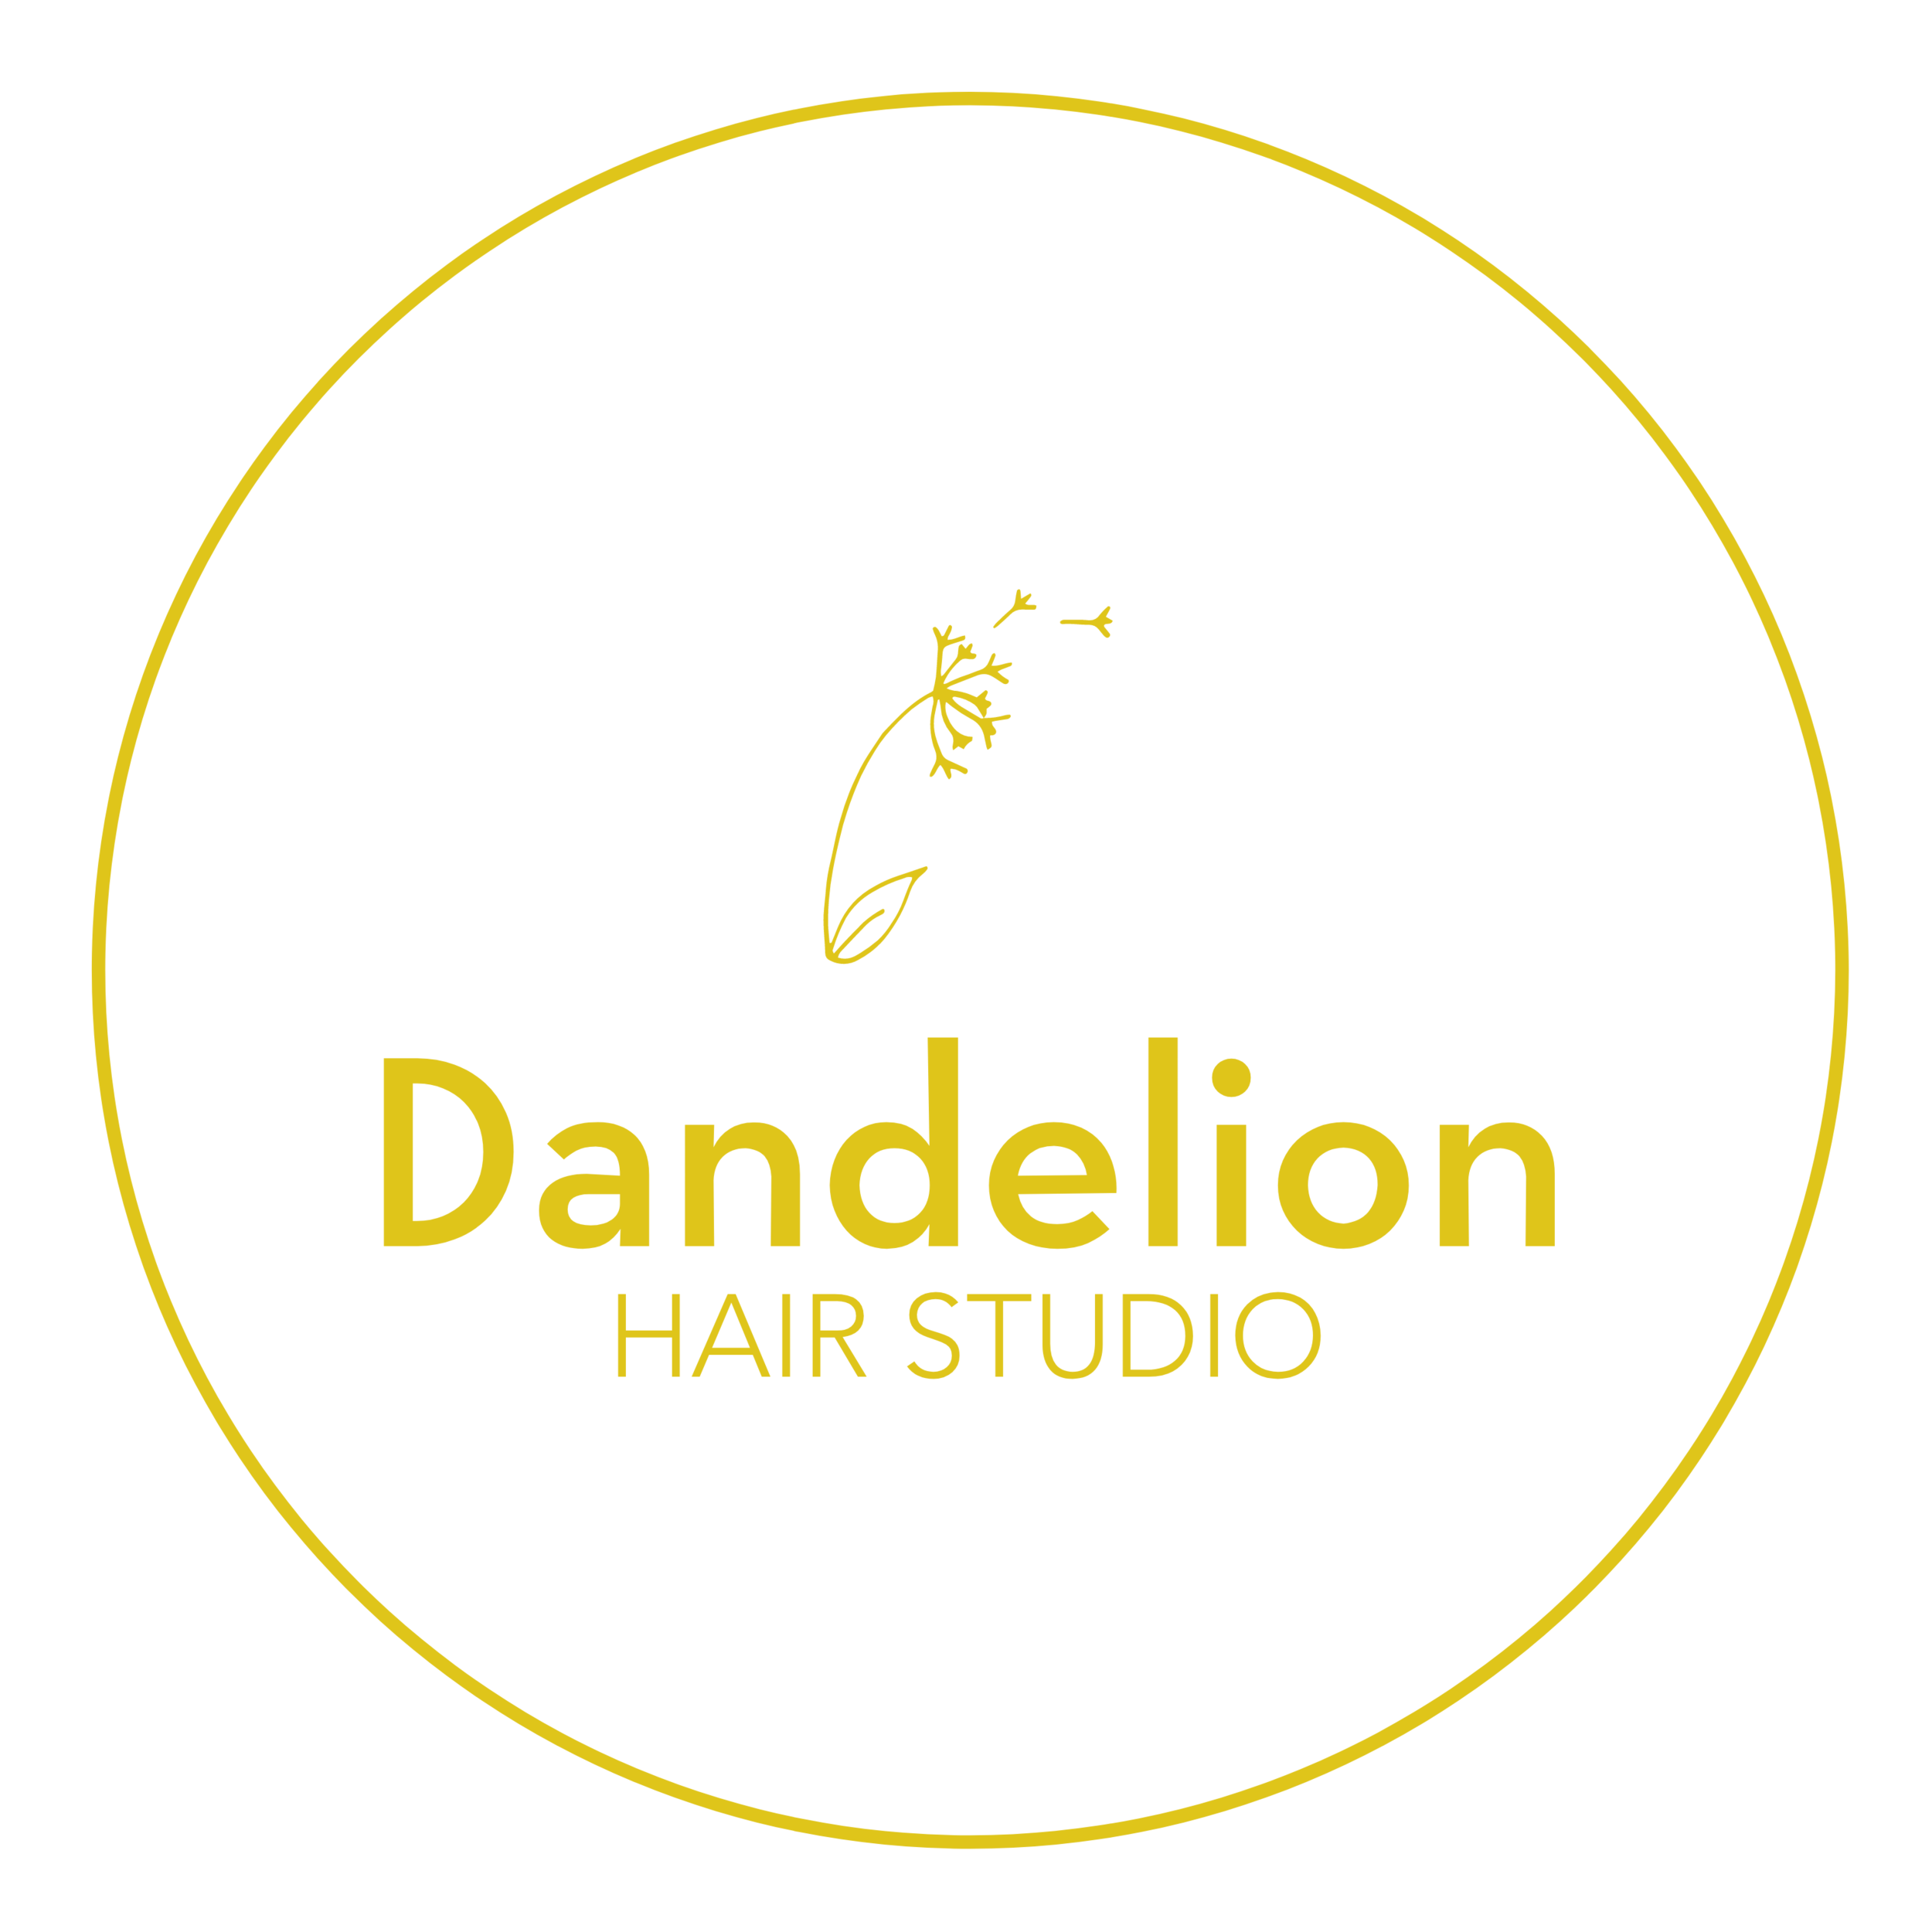 Dandelion Hair Studio